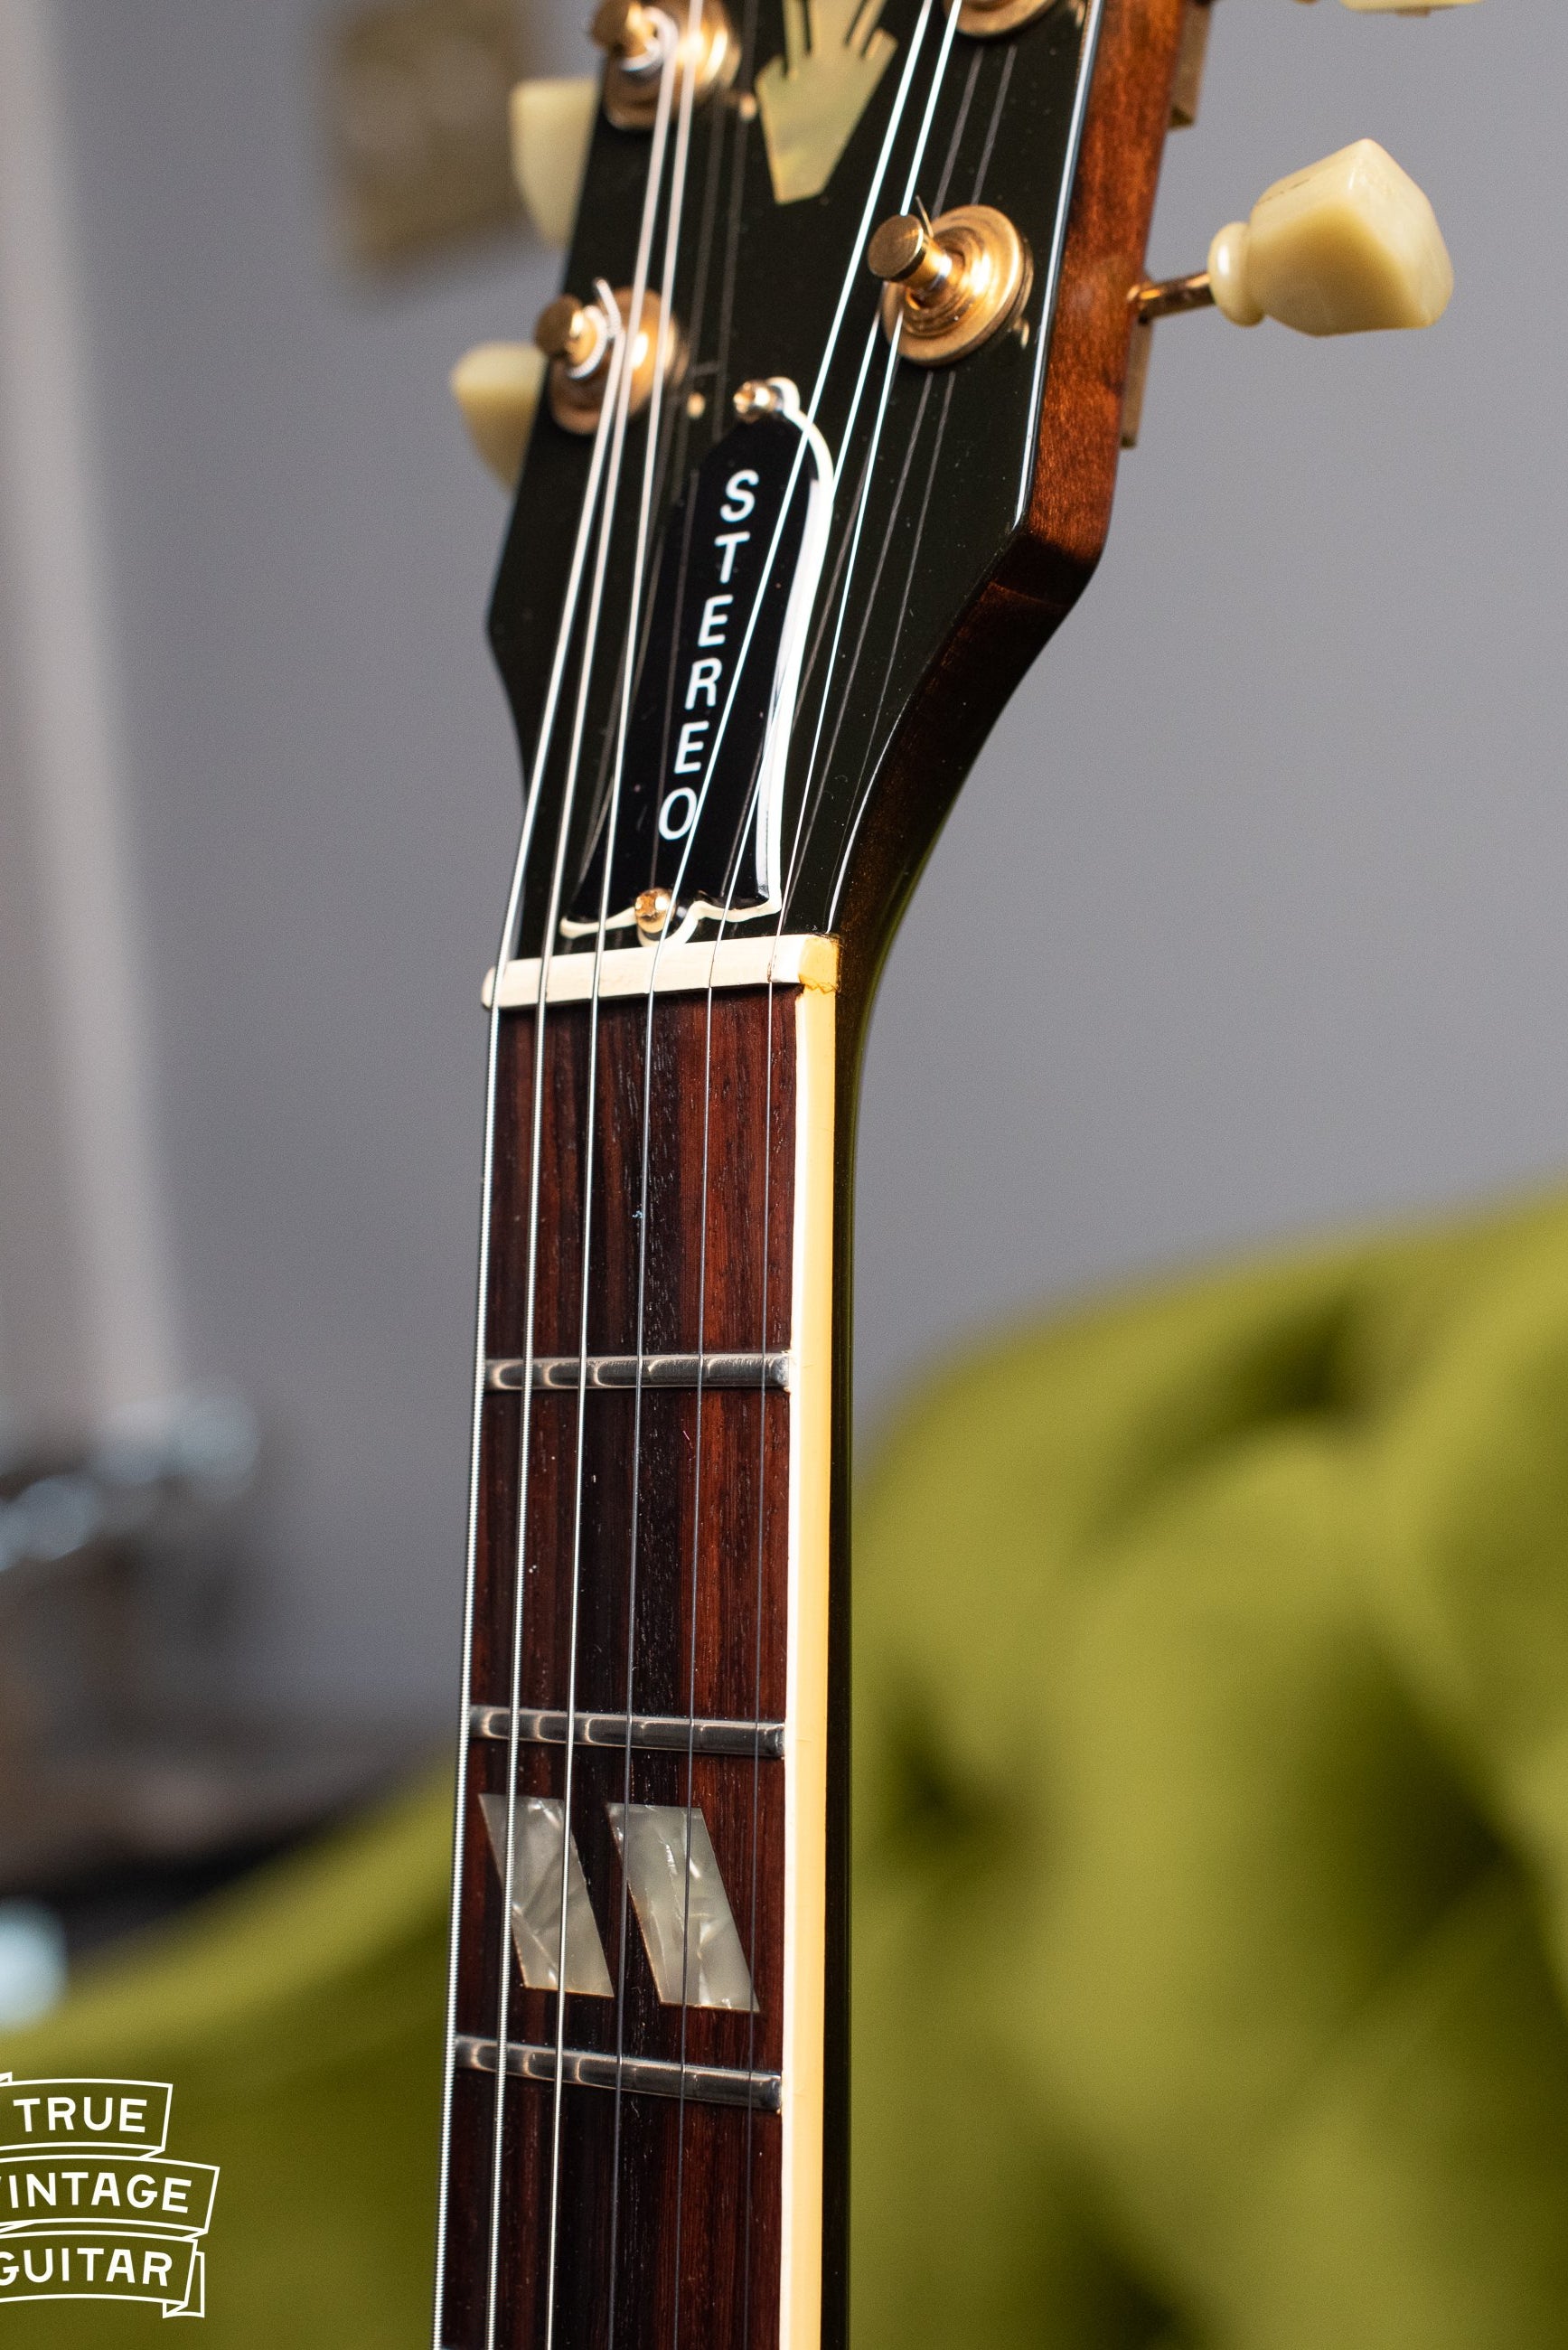 Original nut, 1976 Gibson ES-345 TD Sunburst